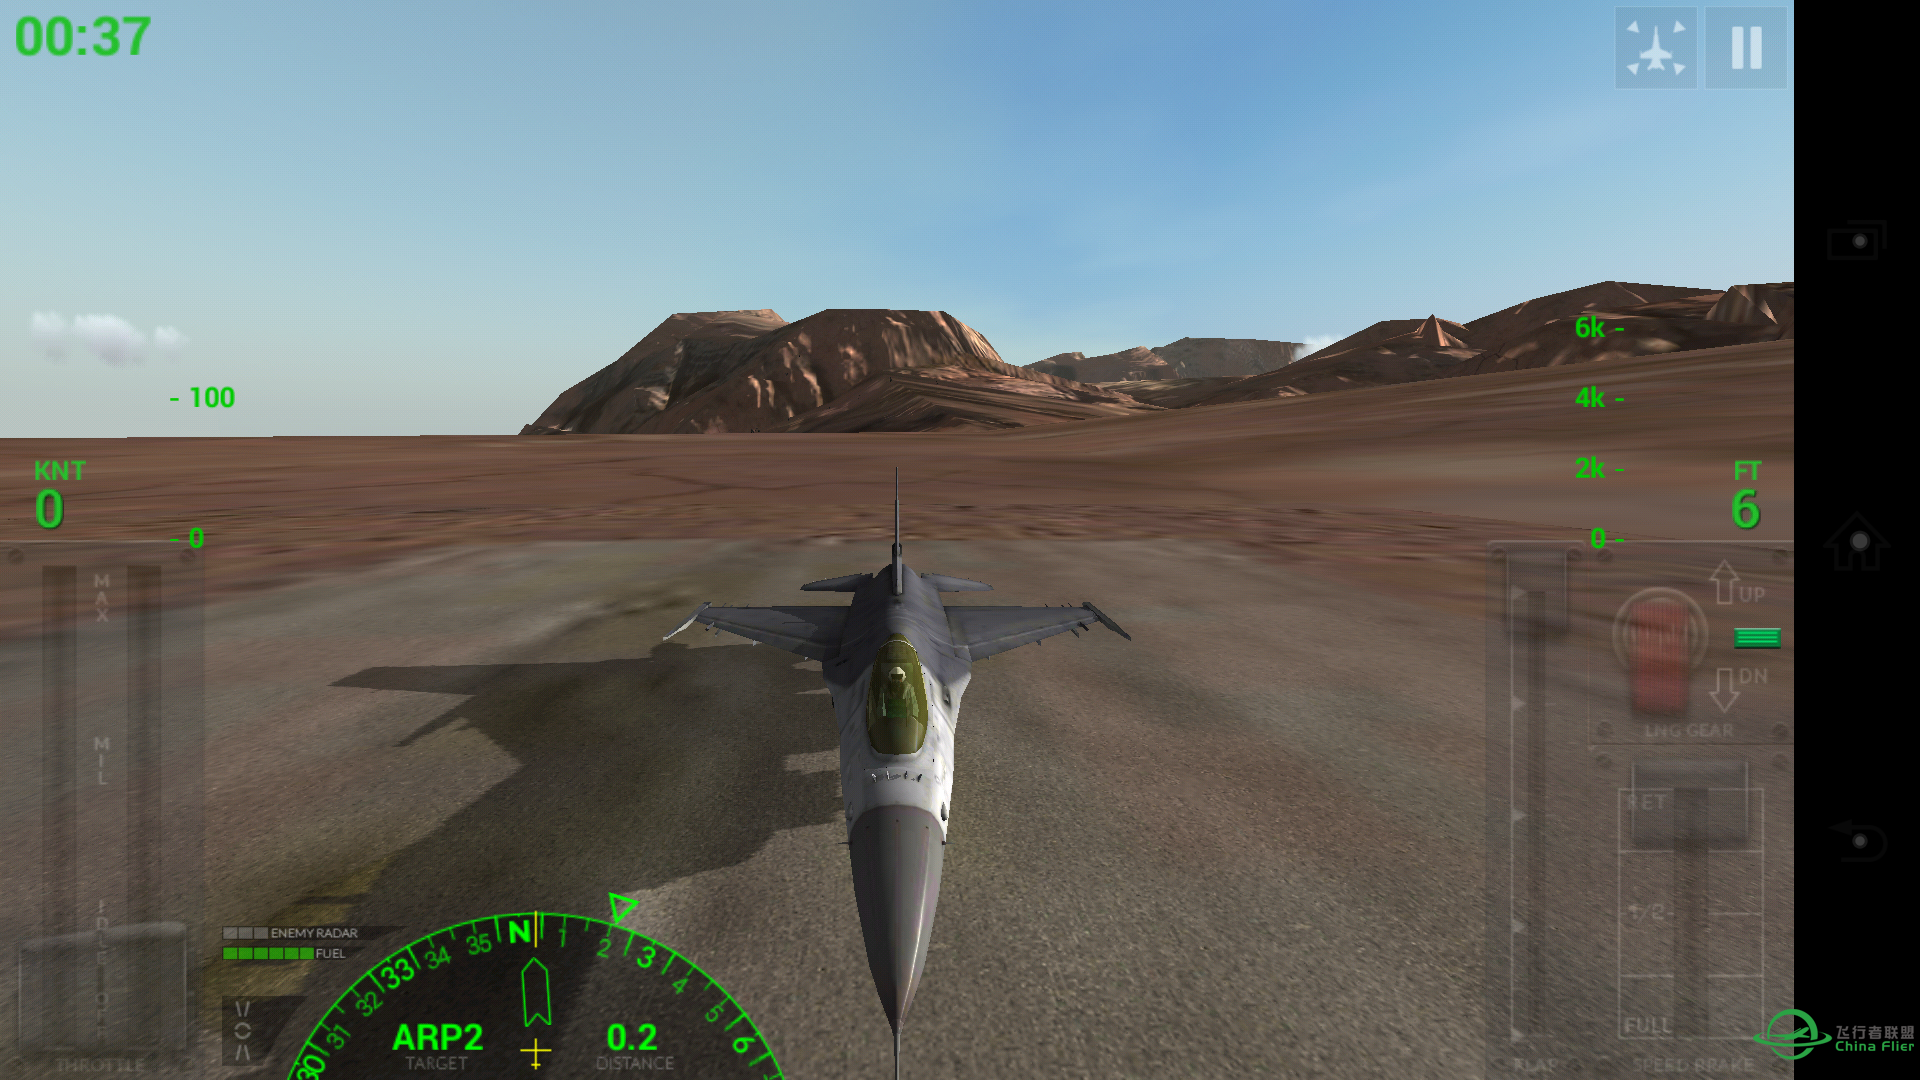 [截图而已]F18 Carrier Landing2 Pro-4219 